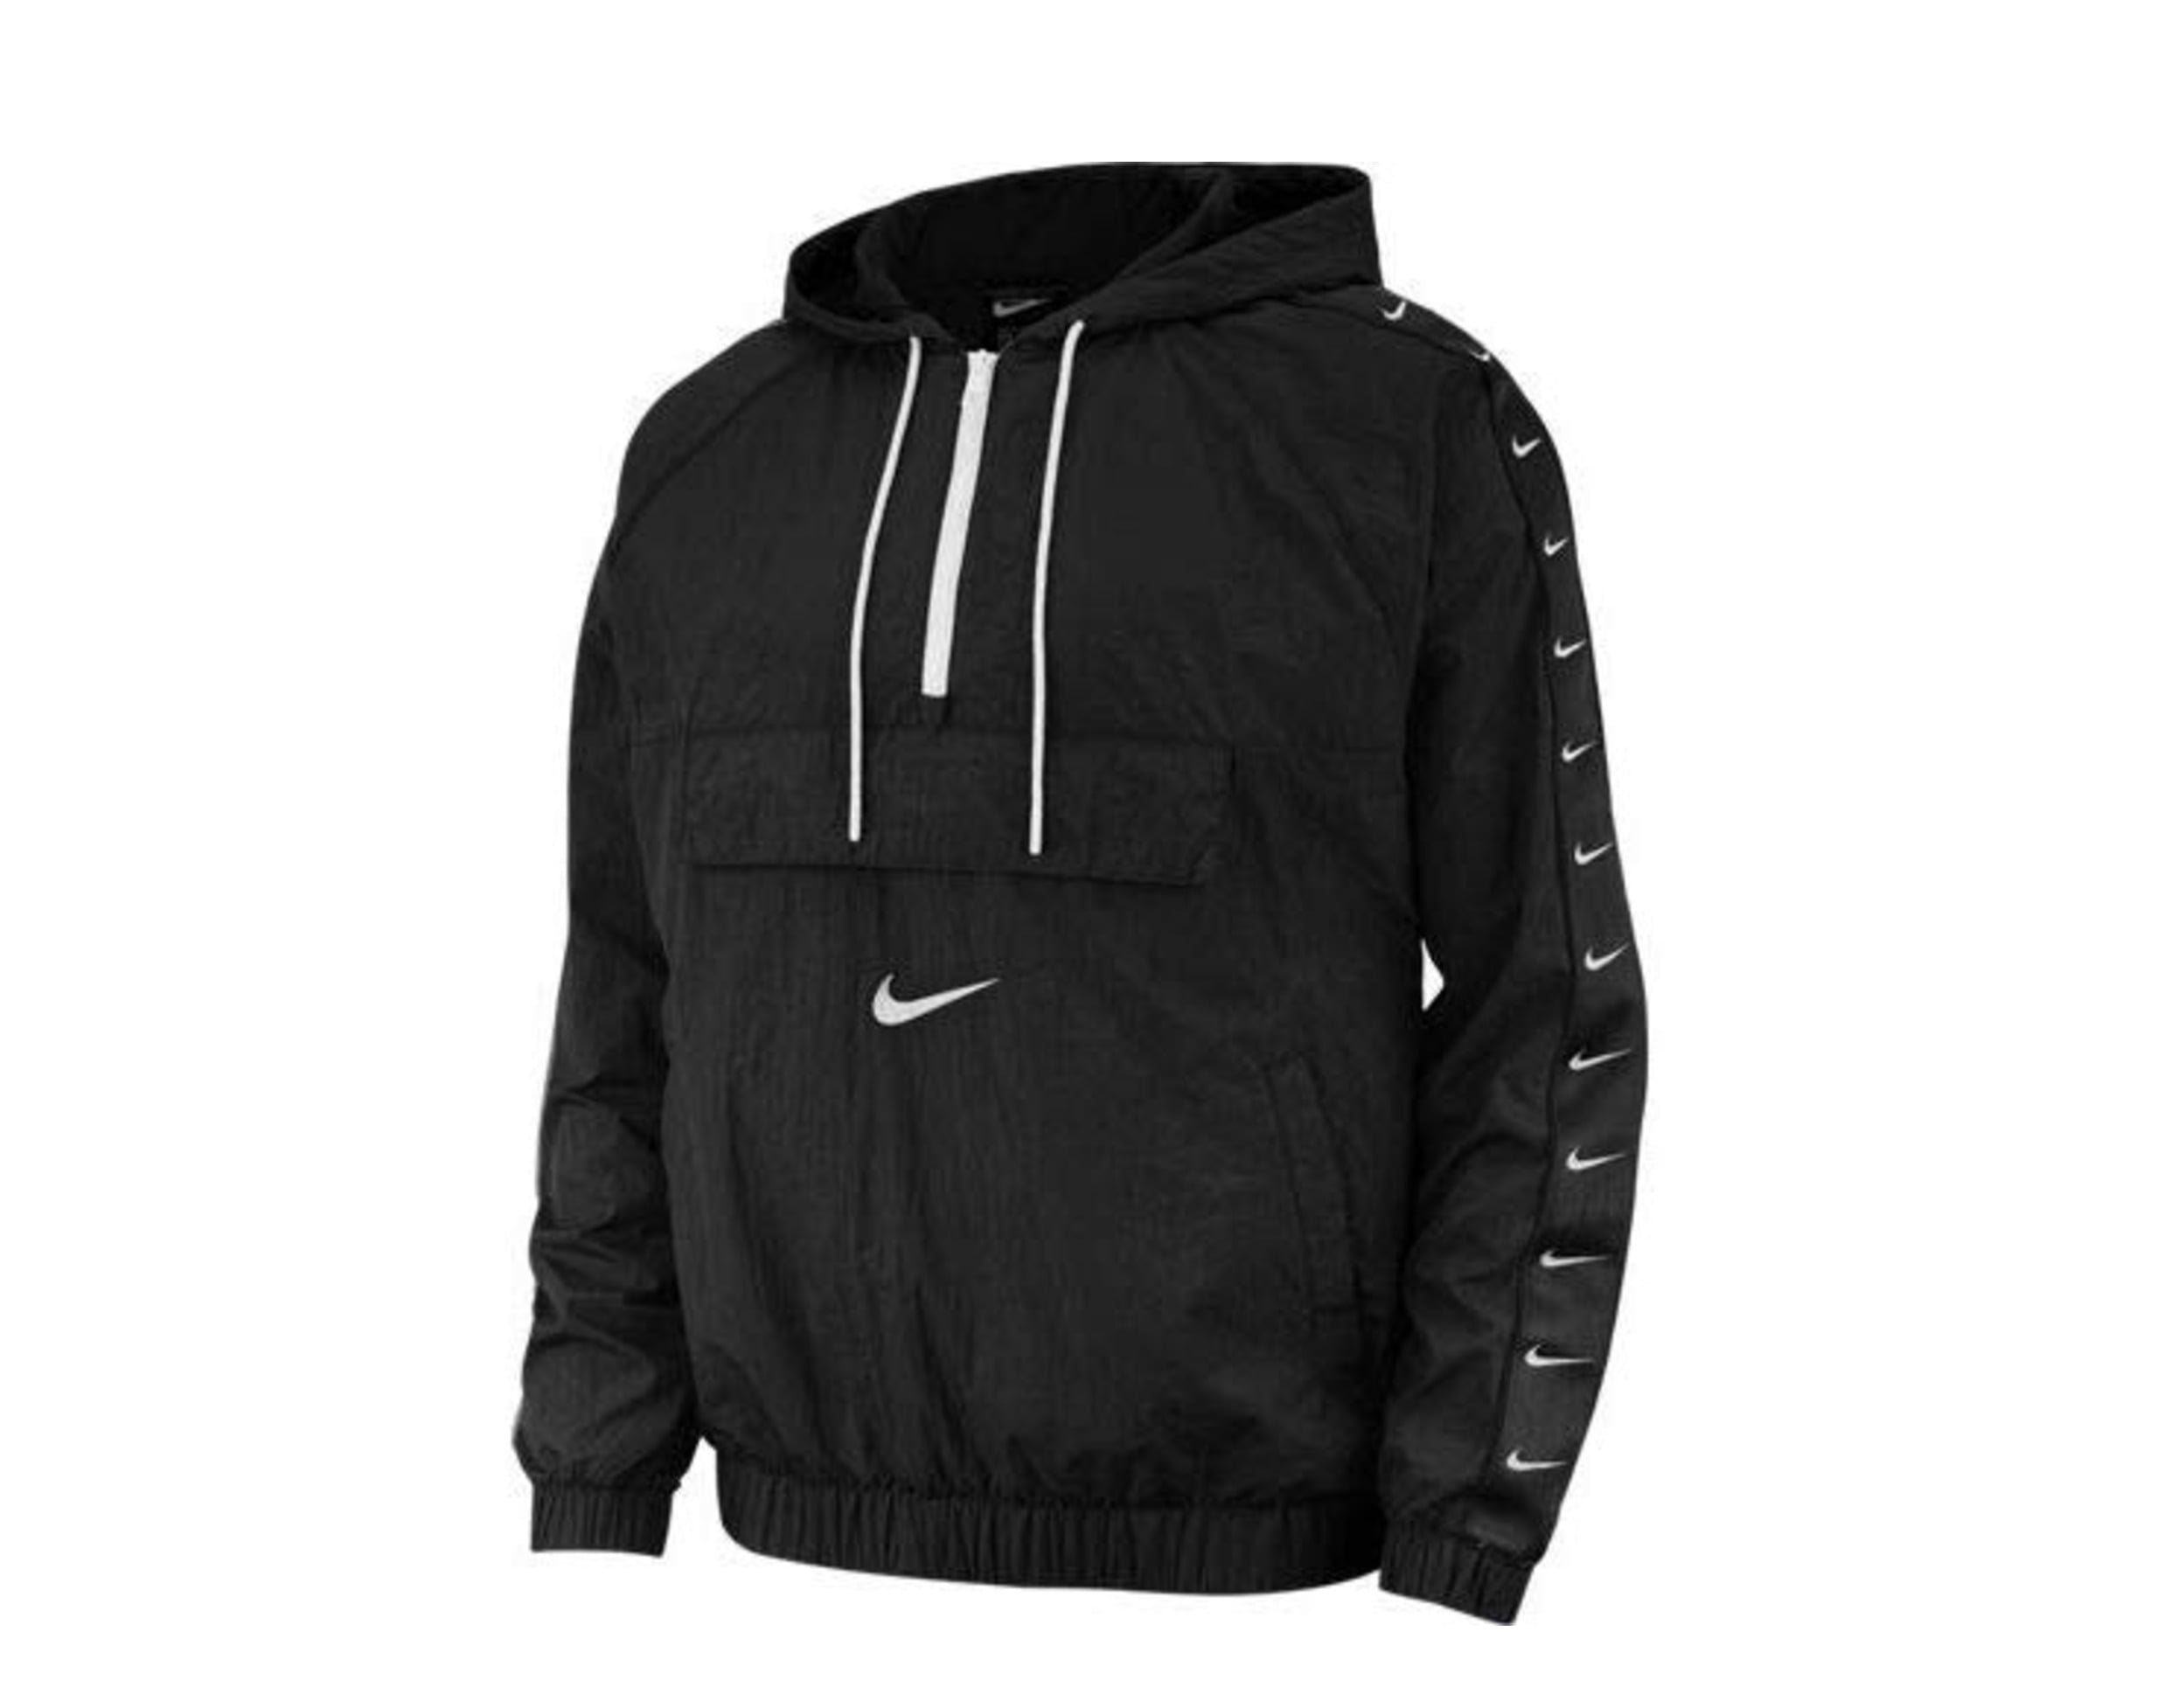 Nike Men's Swoosh Jacket Walmart.com